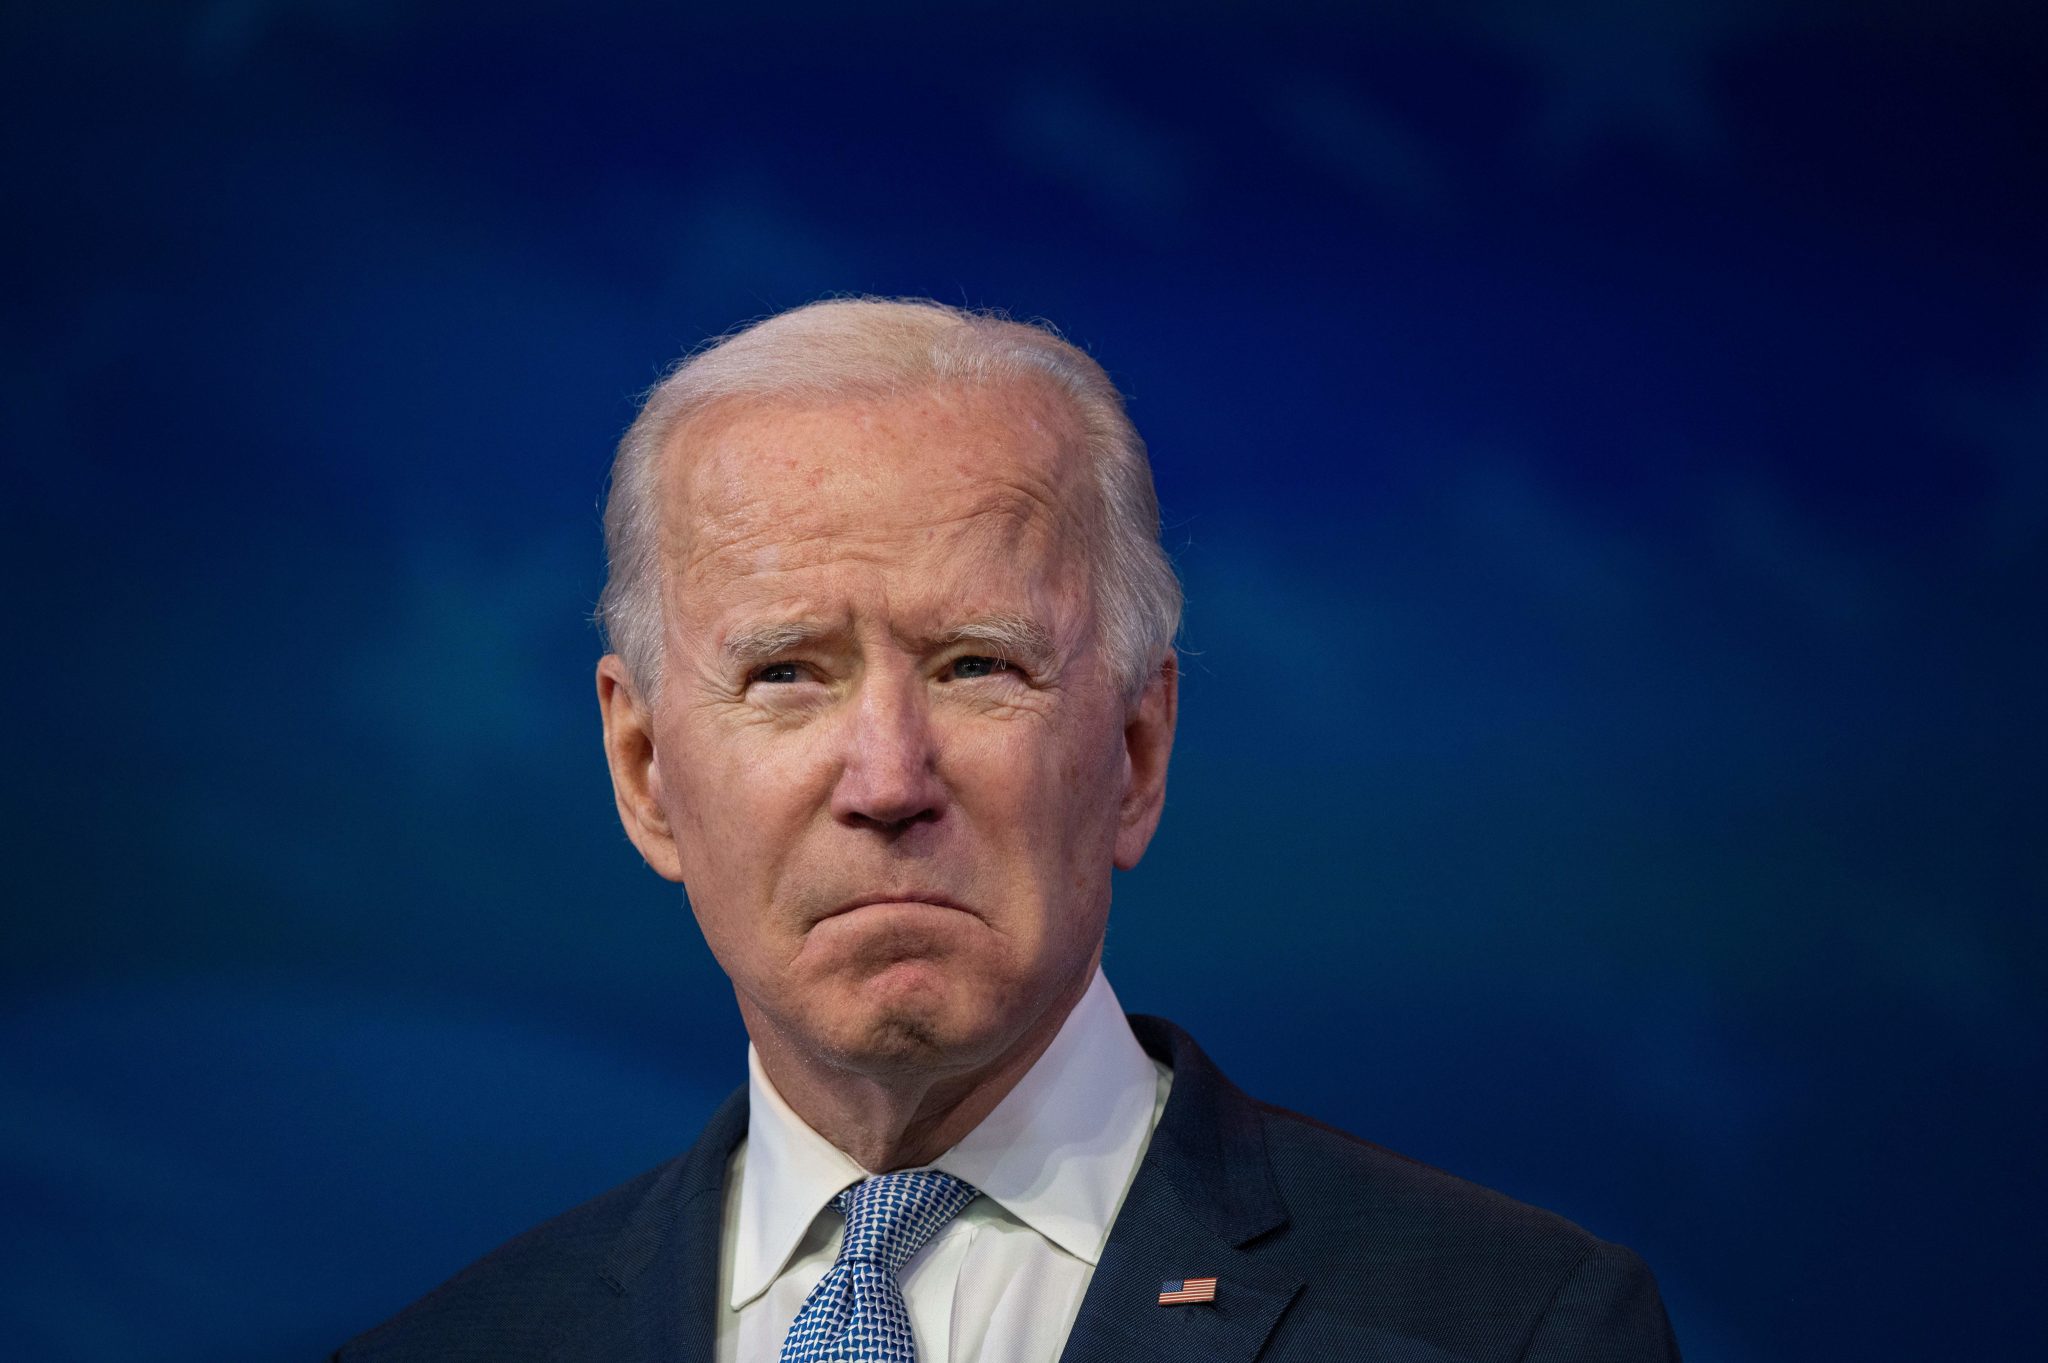 US President-elect Joe Biden in a black suit and blue tie